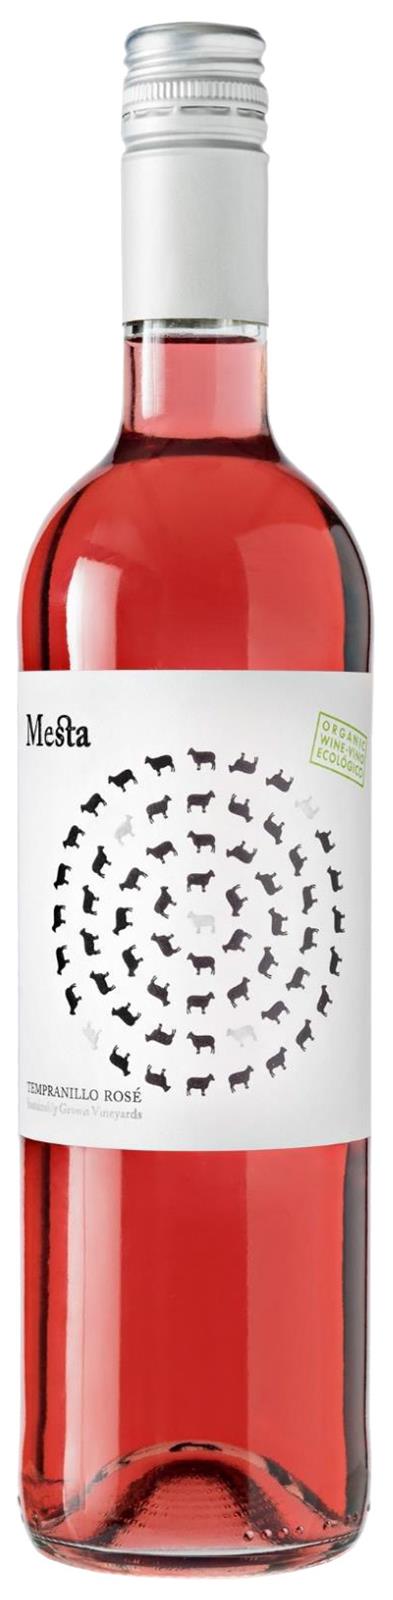 Mesta Organic Rosé 2018 (Spain)